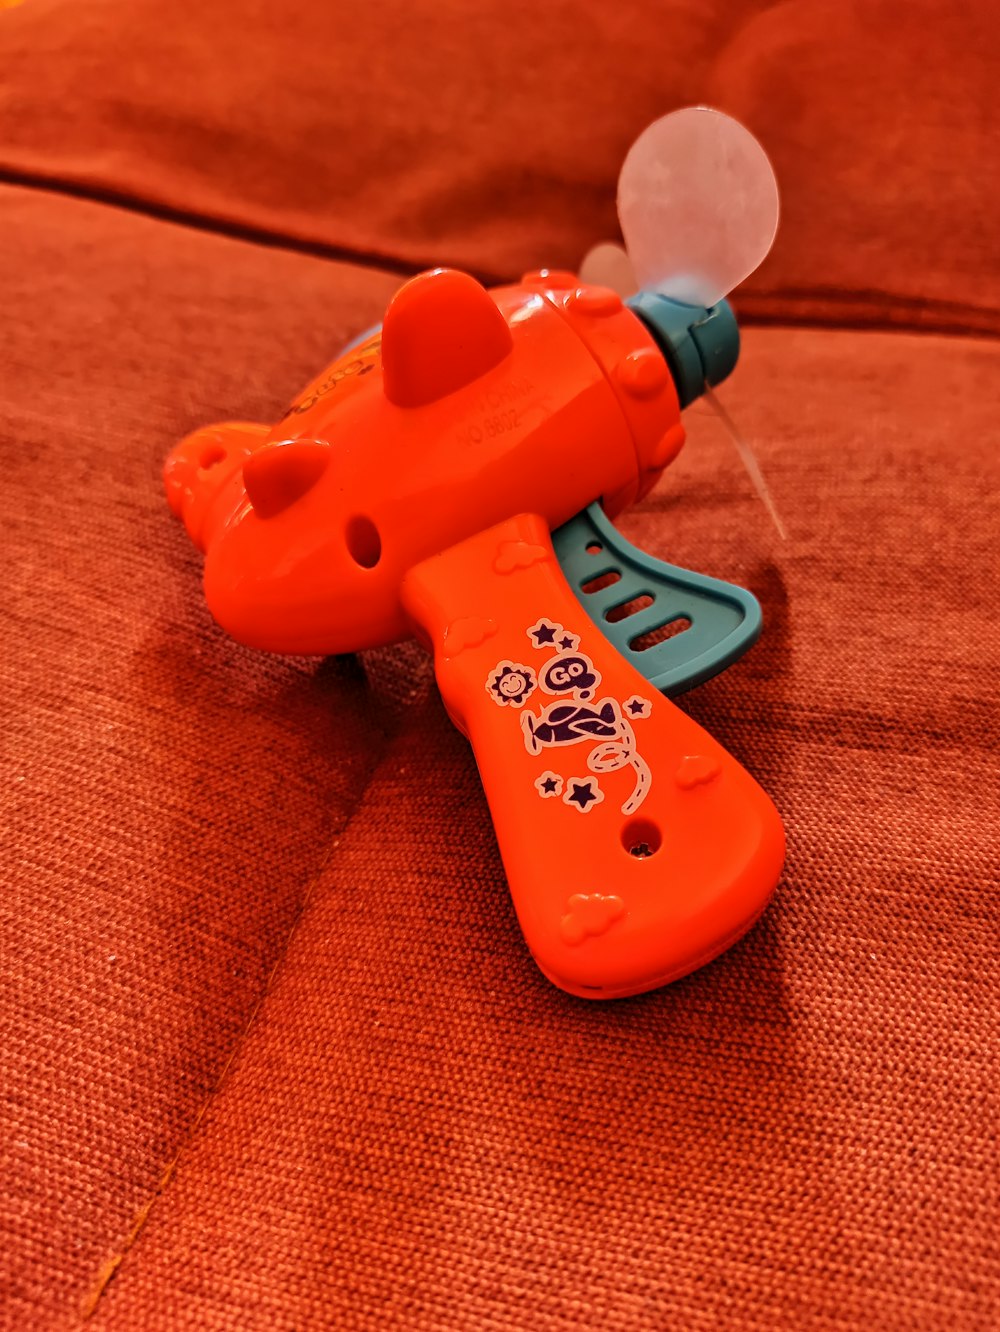 orange and white plastic toy